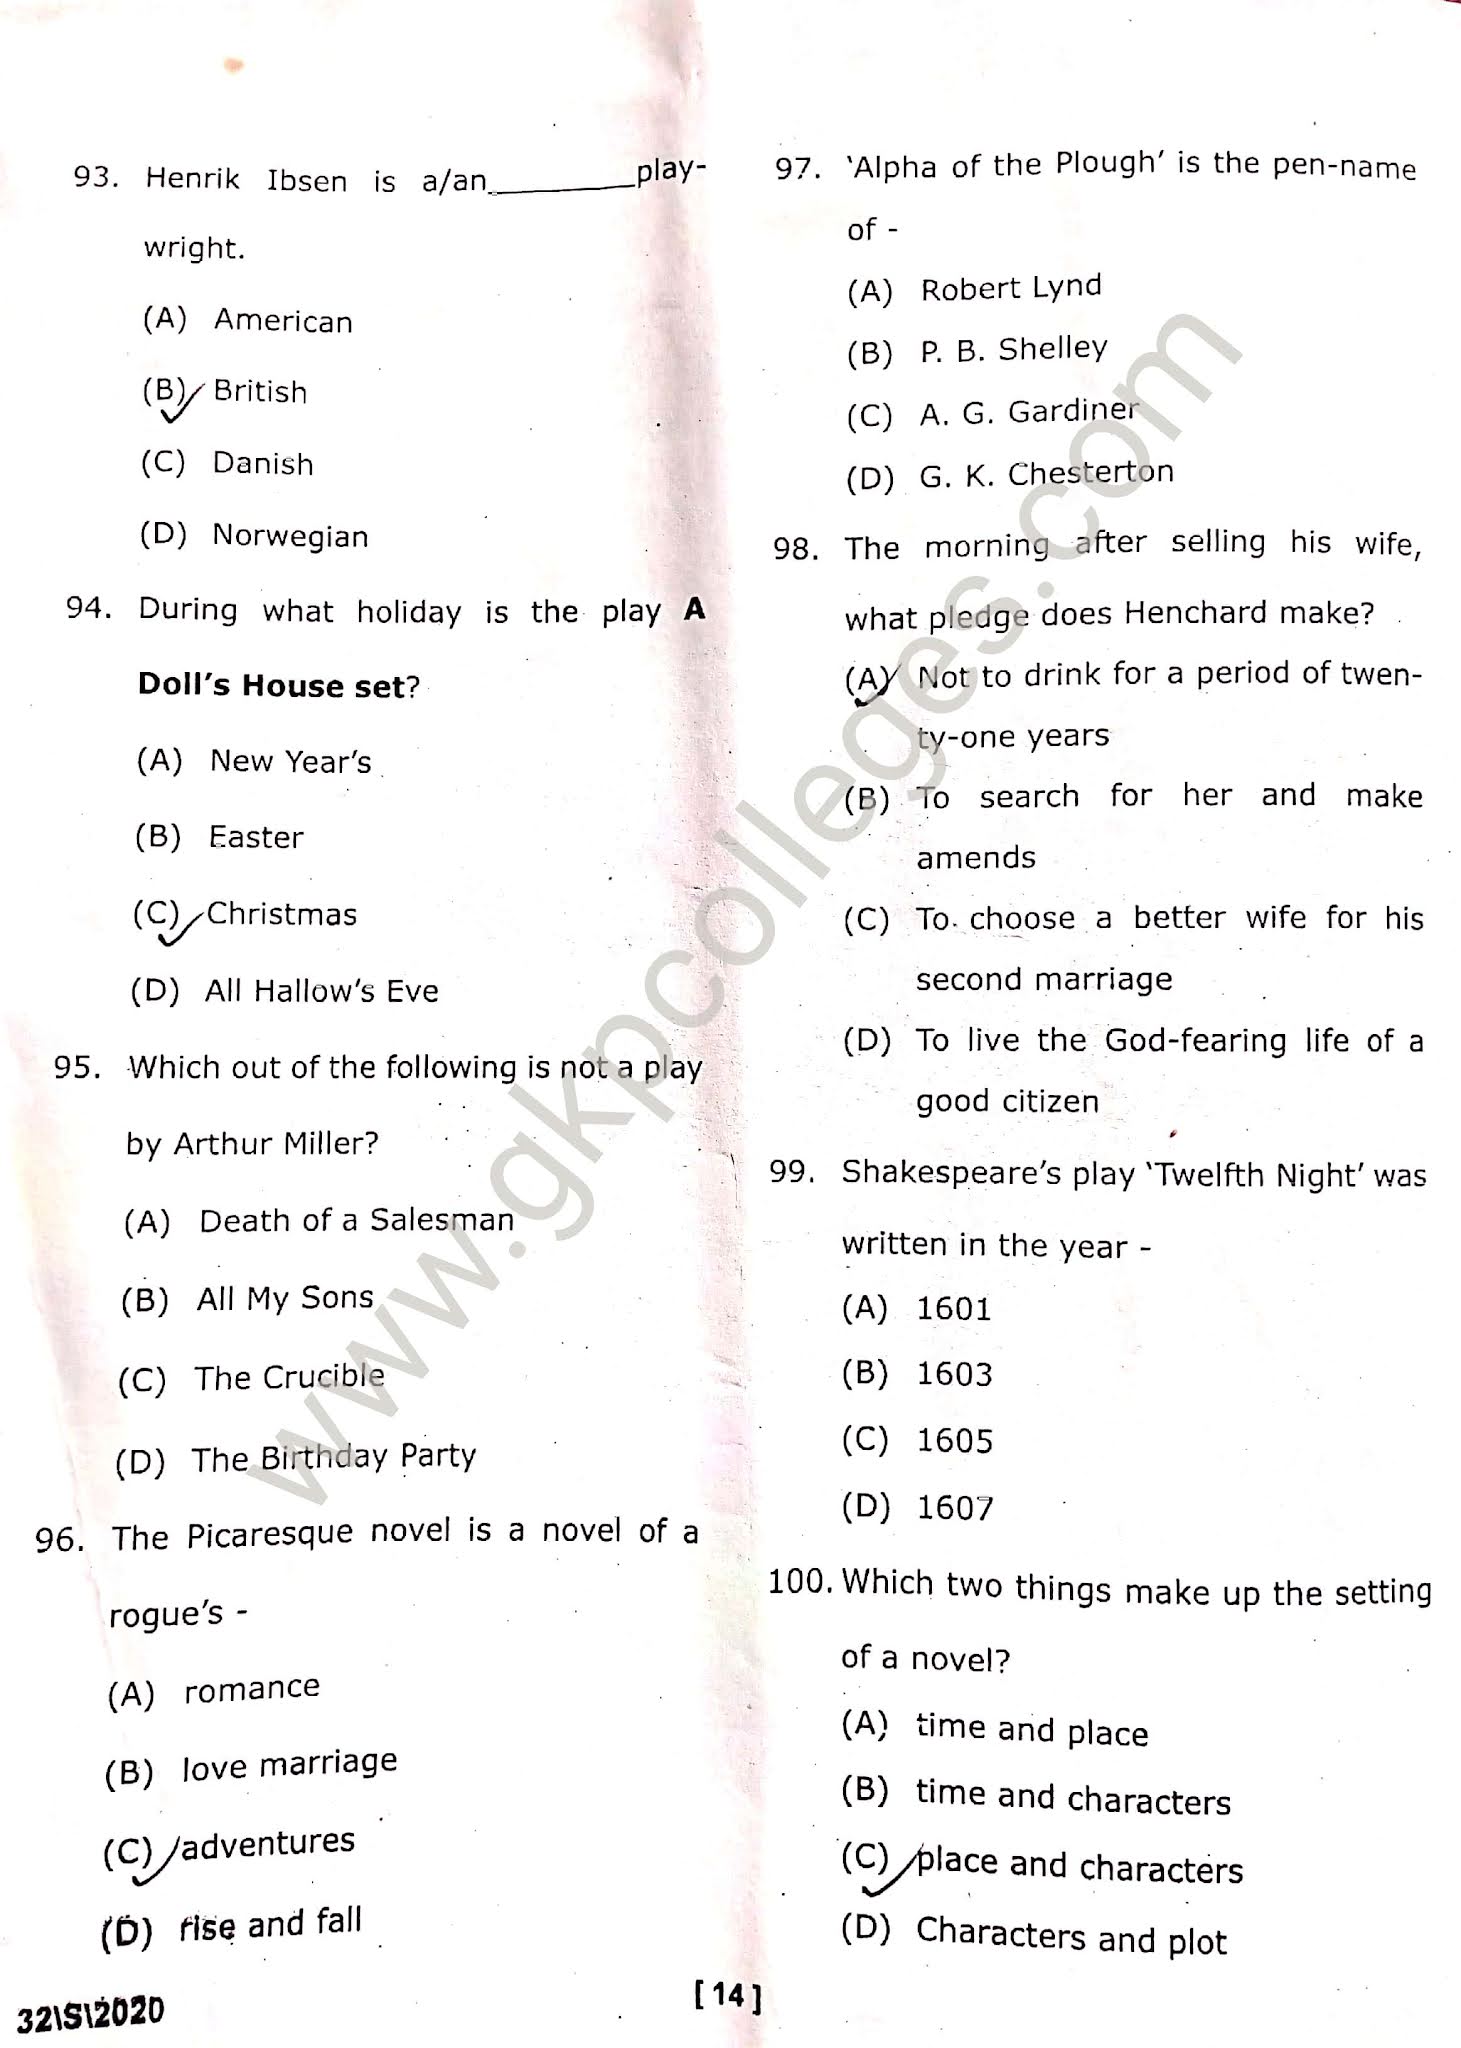 DDU M.A. English Entrance Exam Question Paper 2020 with Answer Key